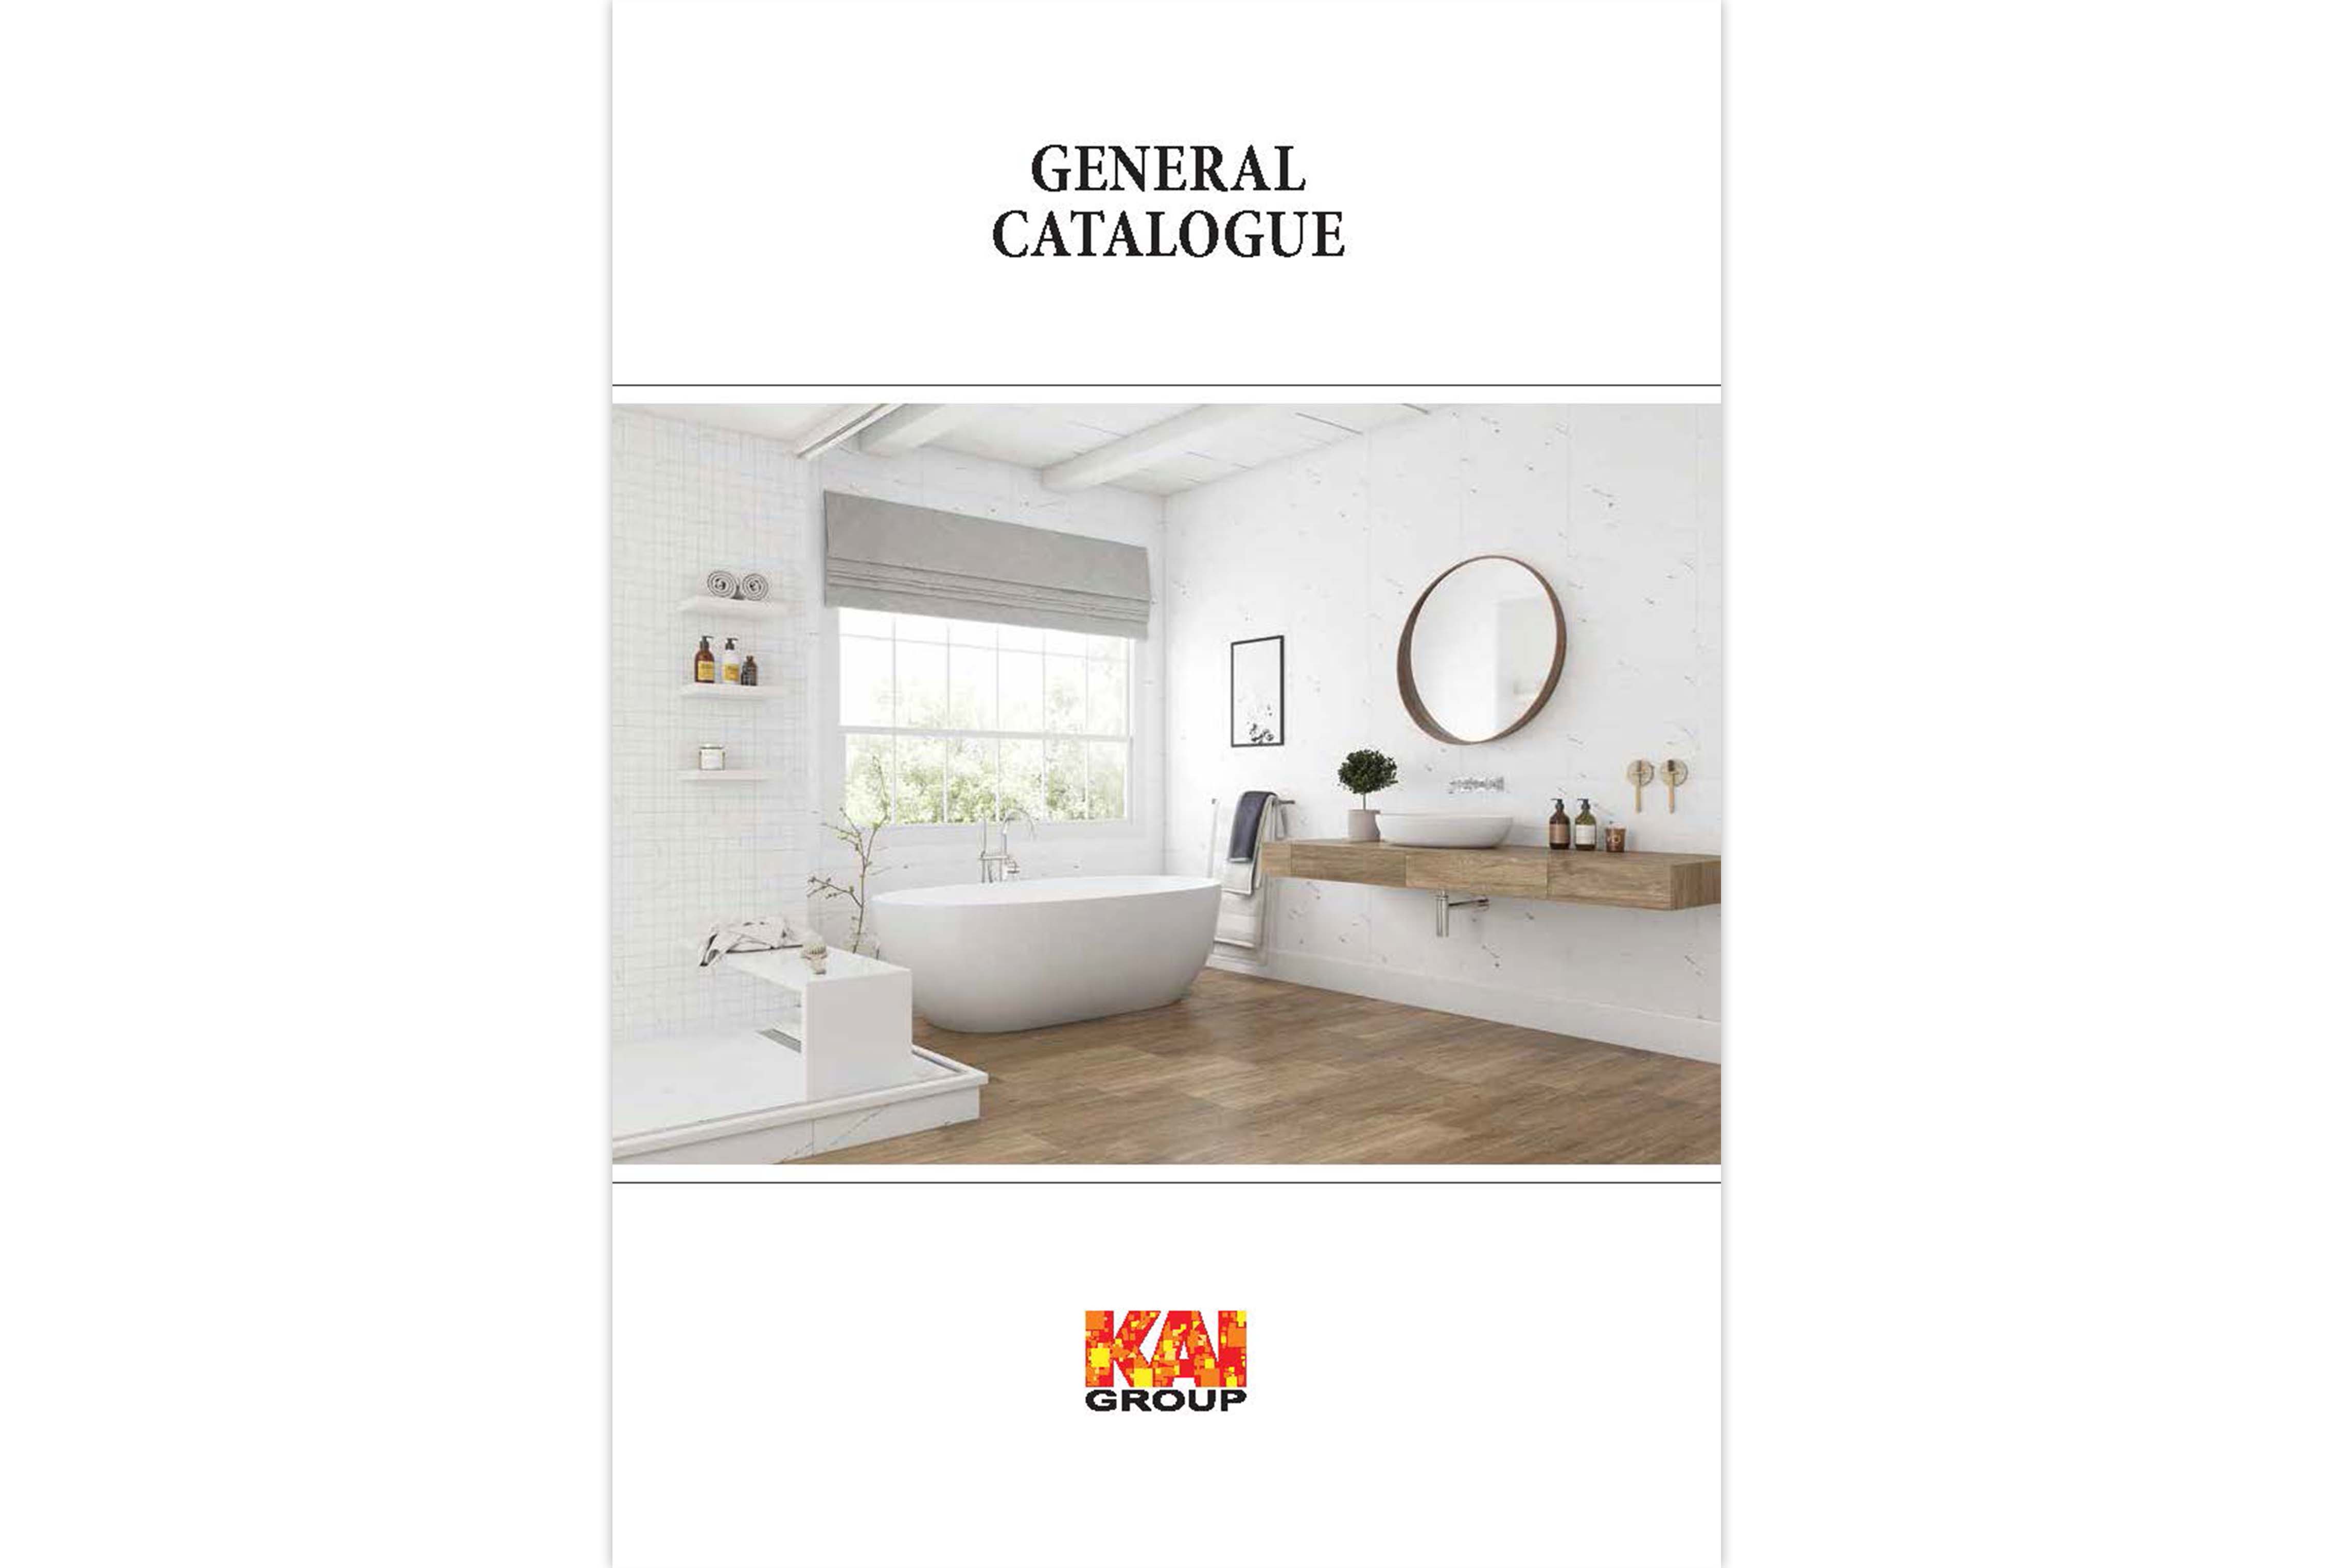 General catalogue KAI 2020